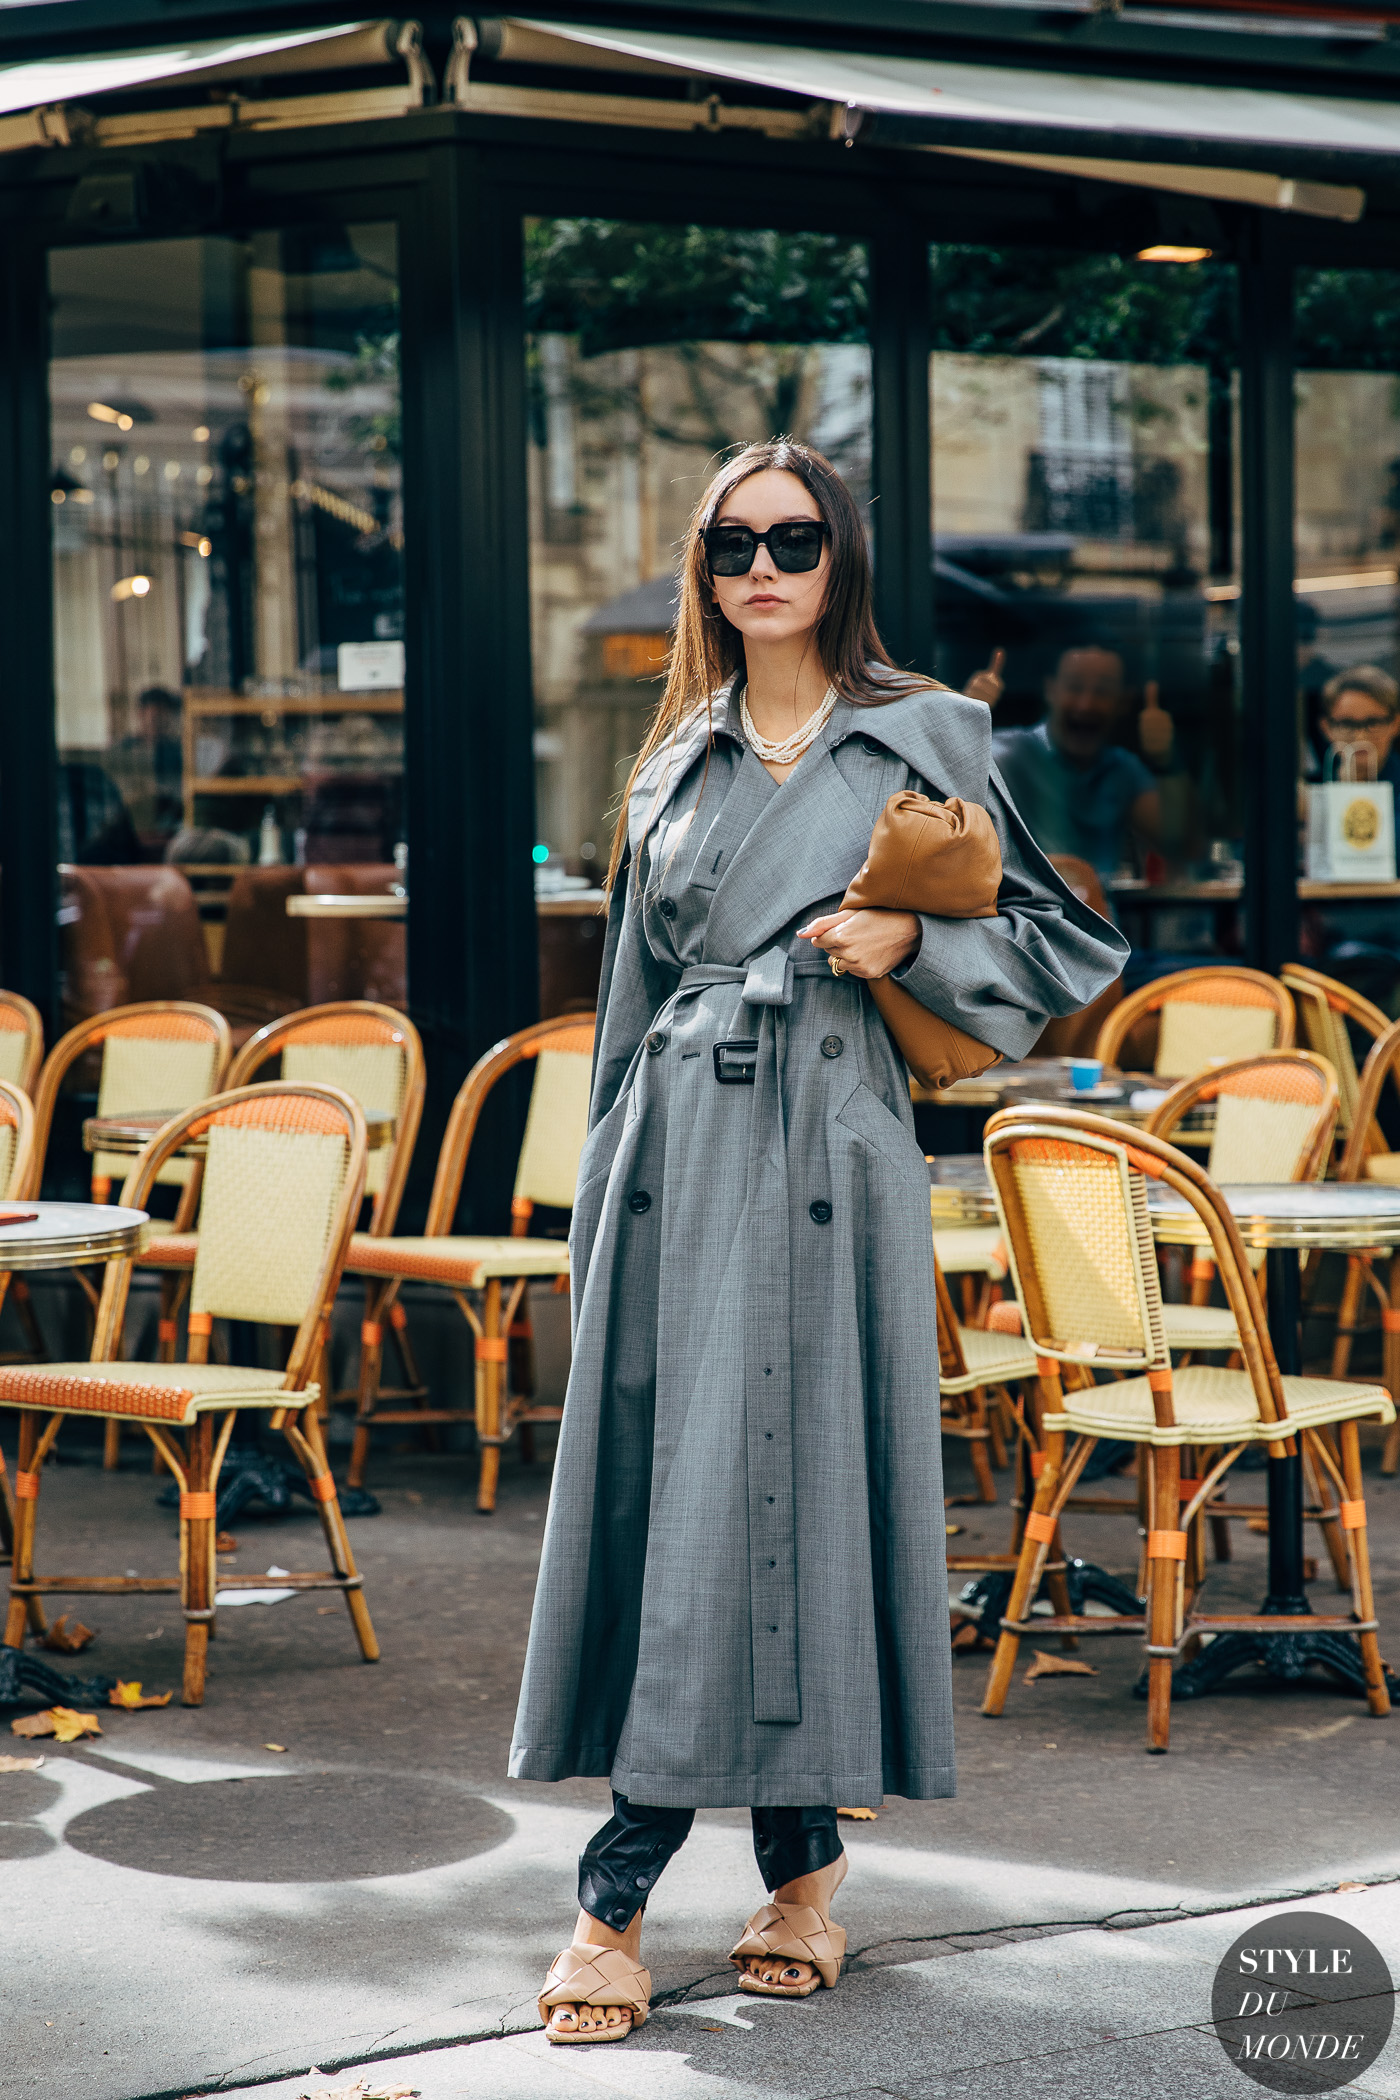 Paris SS 2020 Street Style: Beatrice Gutu - STYLE DU MONDE | Street ...